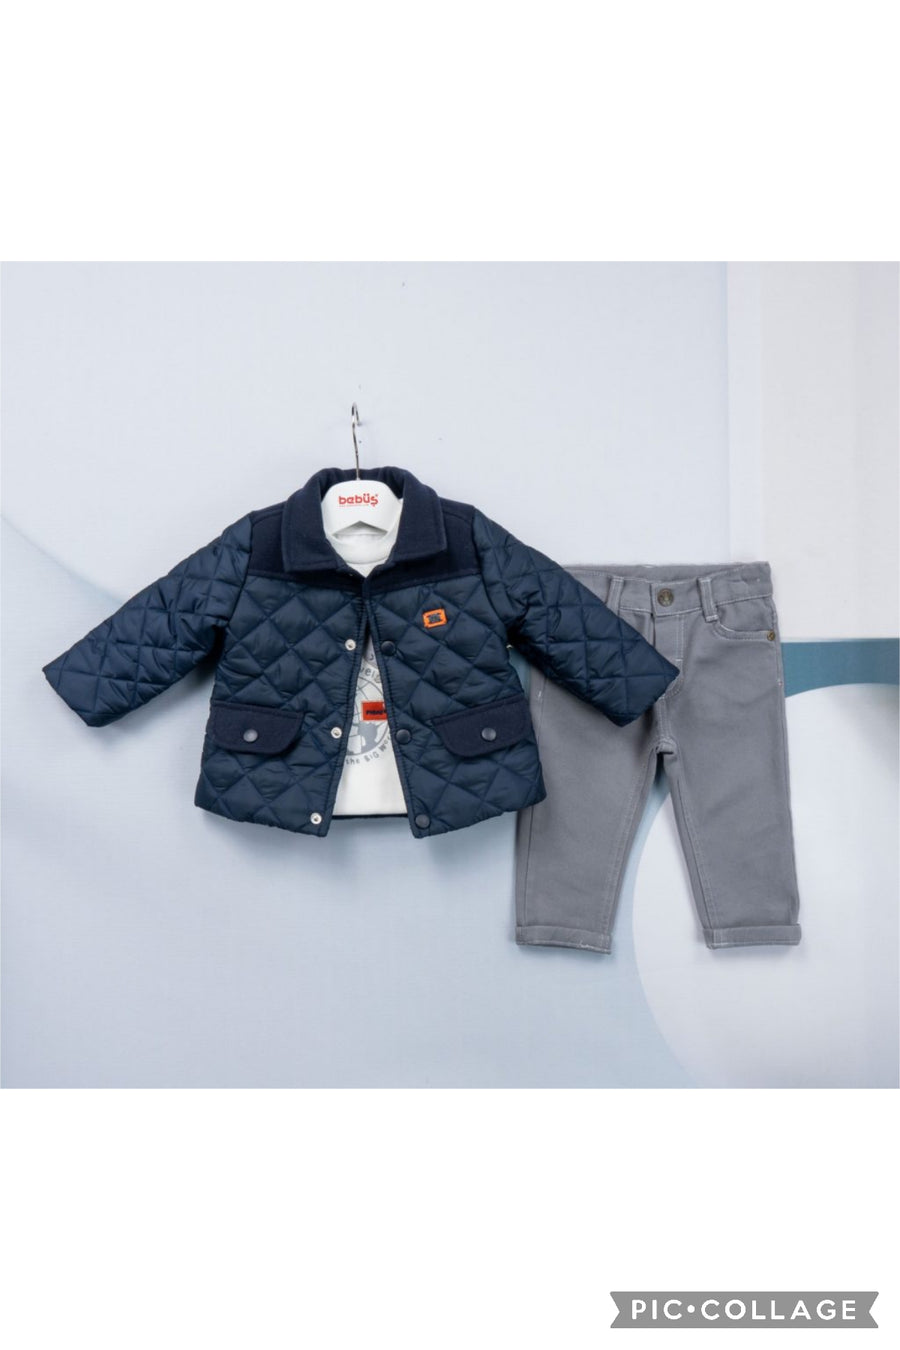 Boys 3 Piece Cross Stitch Jacket & Jeans Set - Navy/Grey